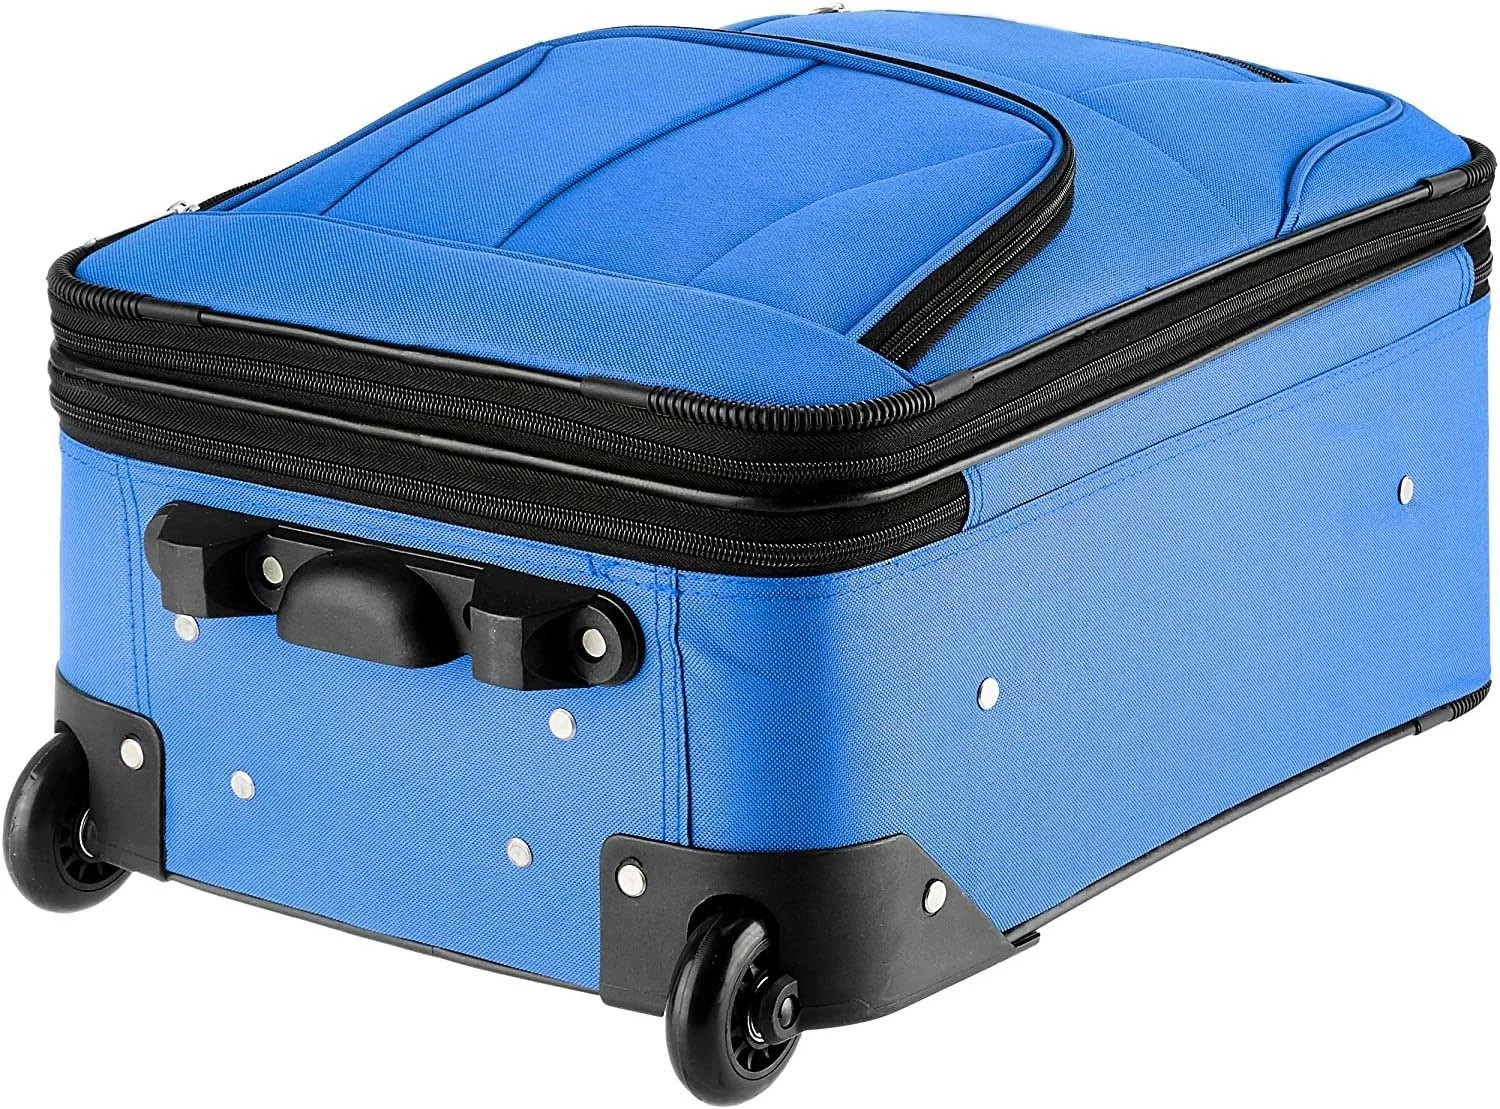 Wholesale Handheld Travel Bag Large Capacity Leisure Luggage Trolley Bag